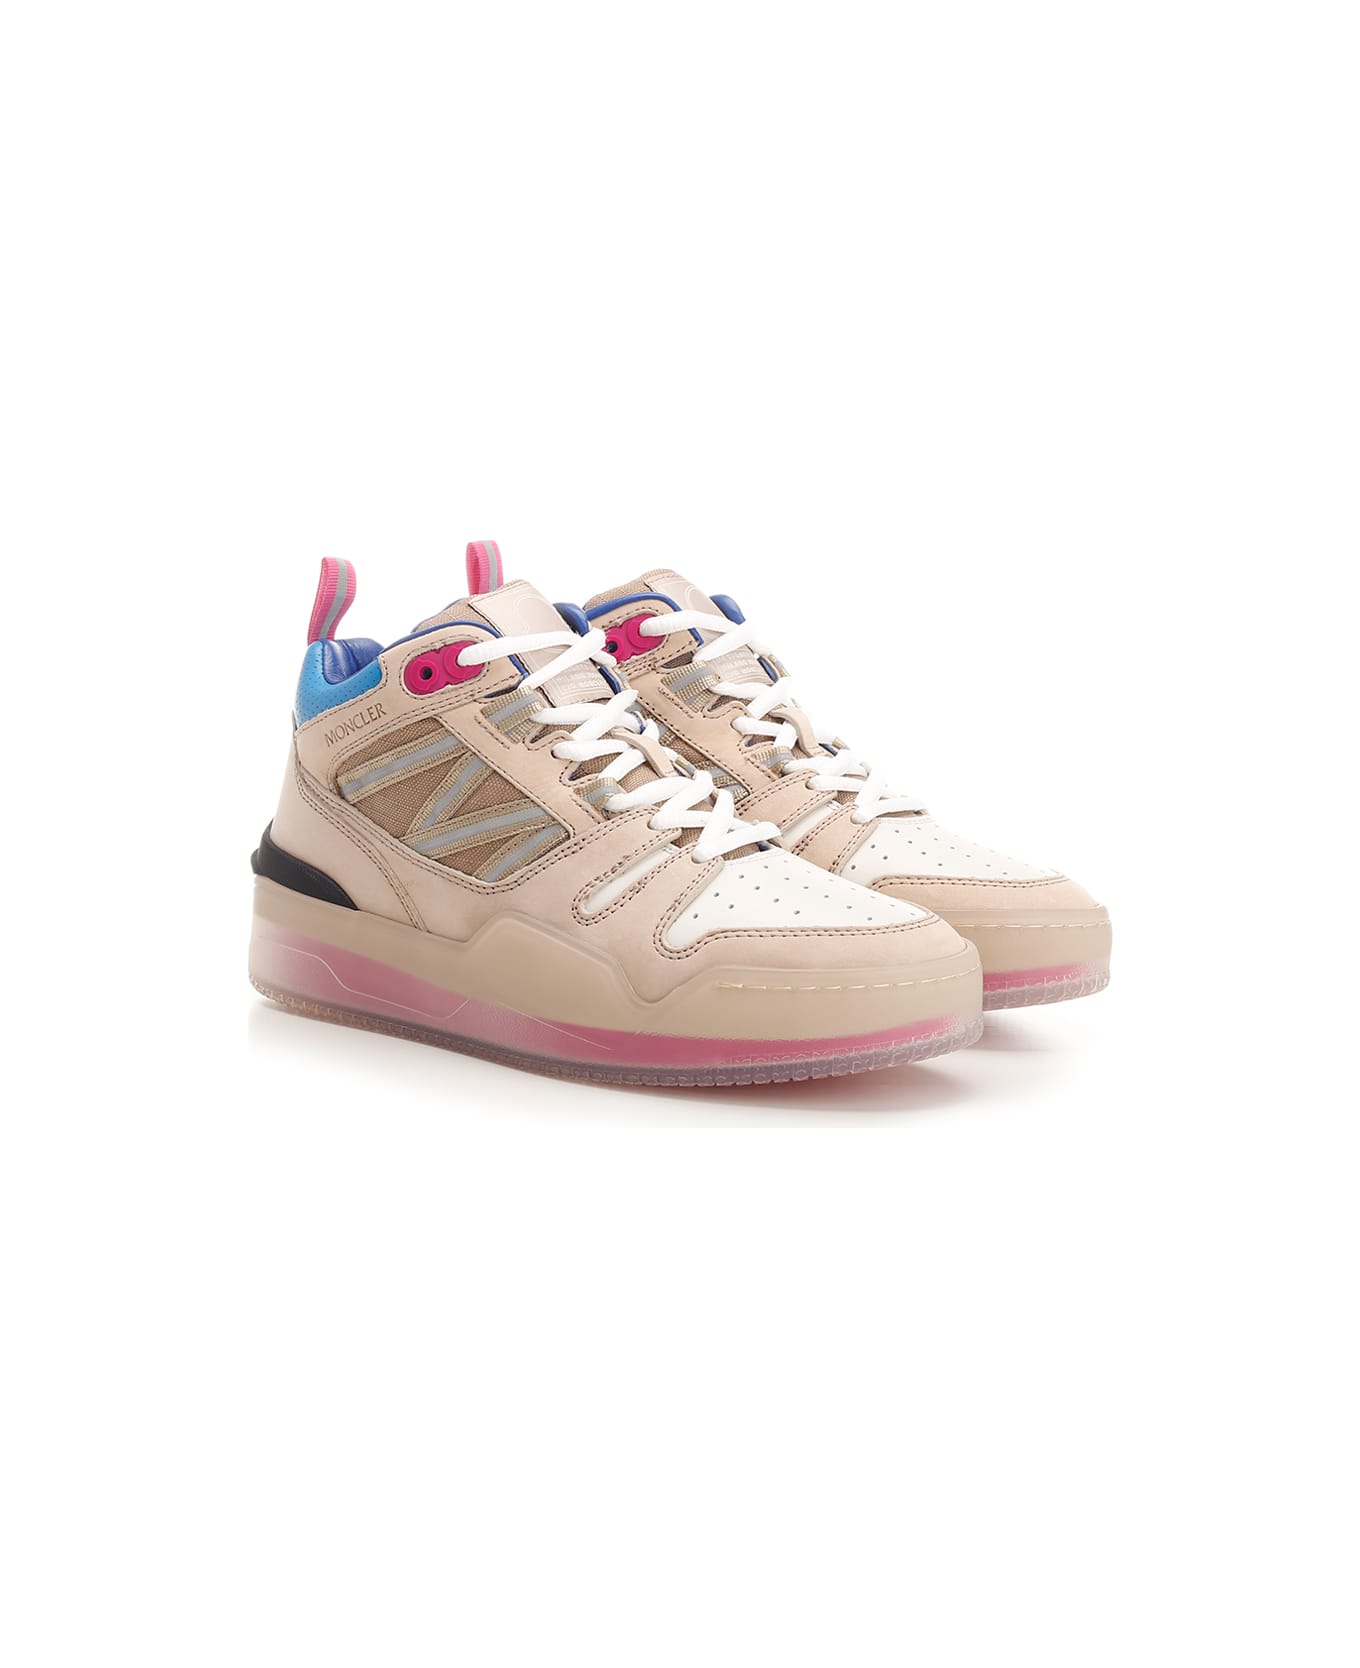 Moncler 'pivot' High Top Sneakers - Pink スニーカー